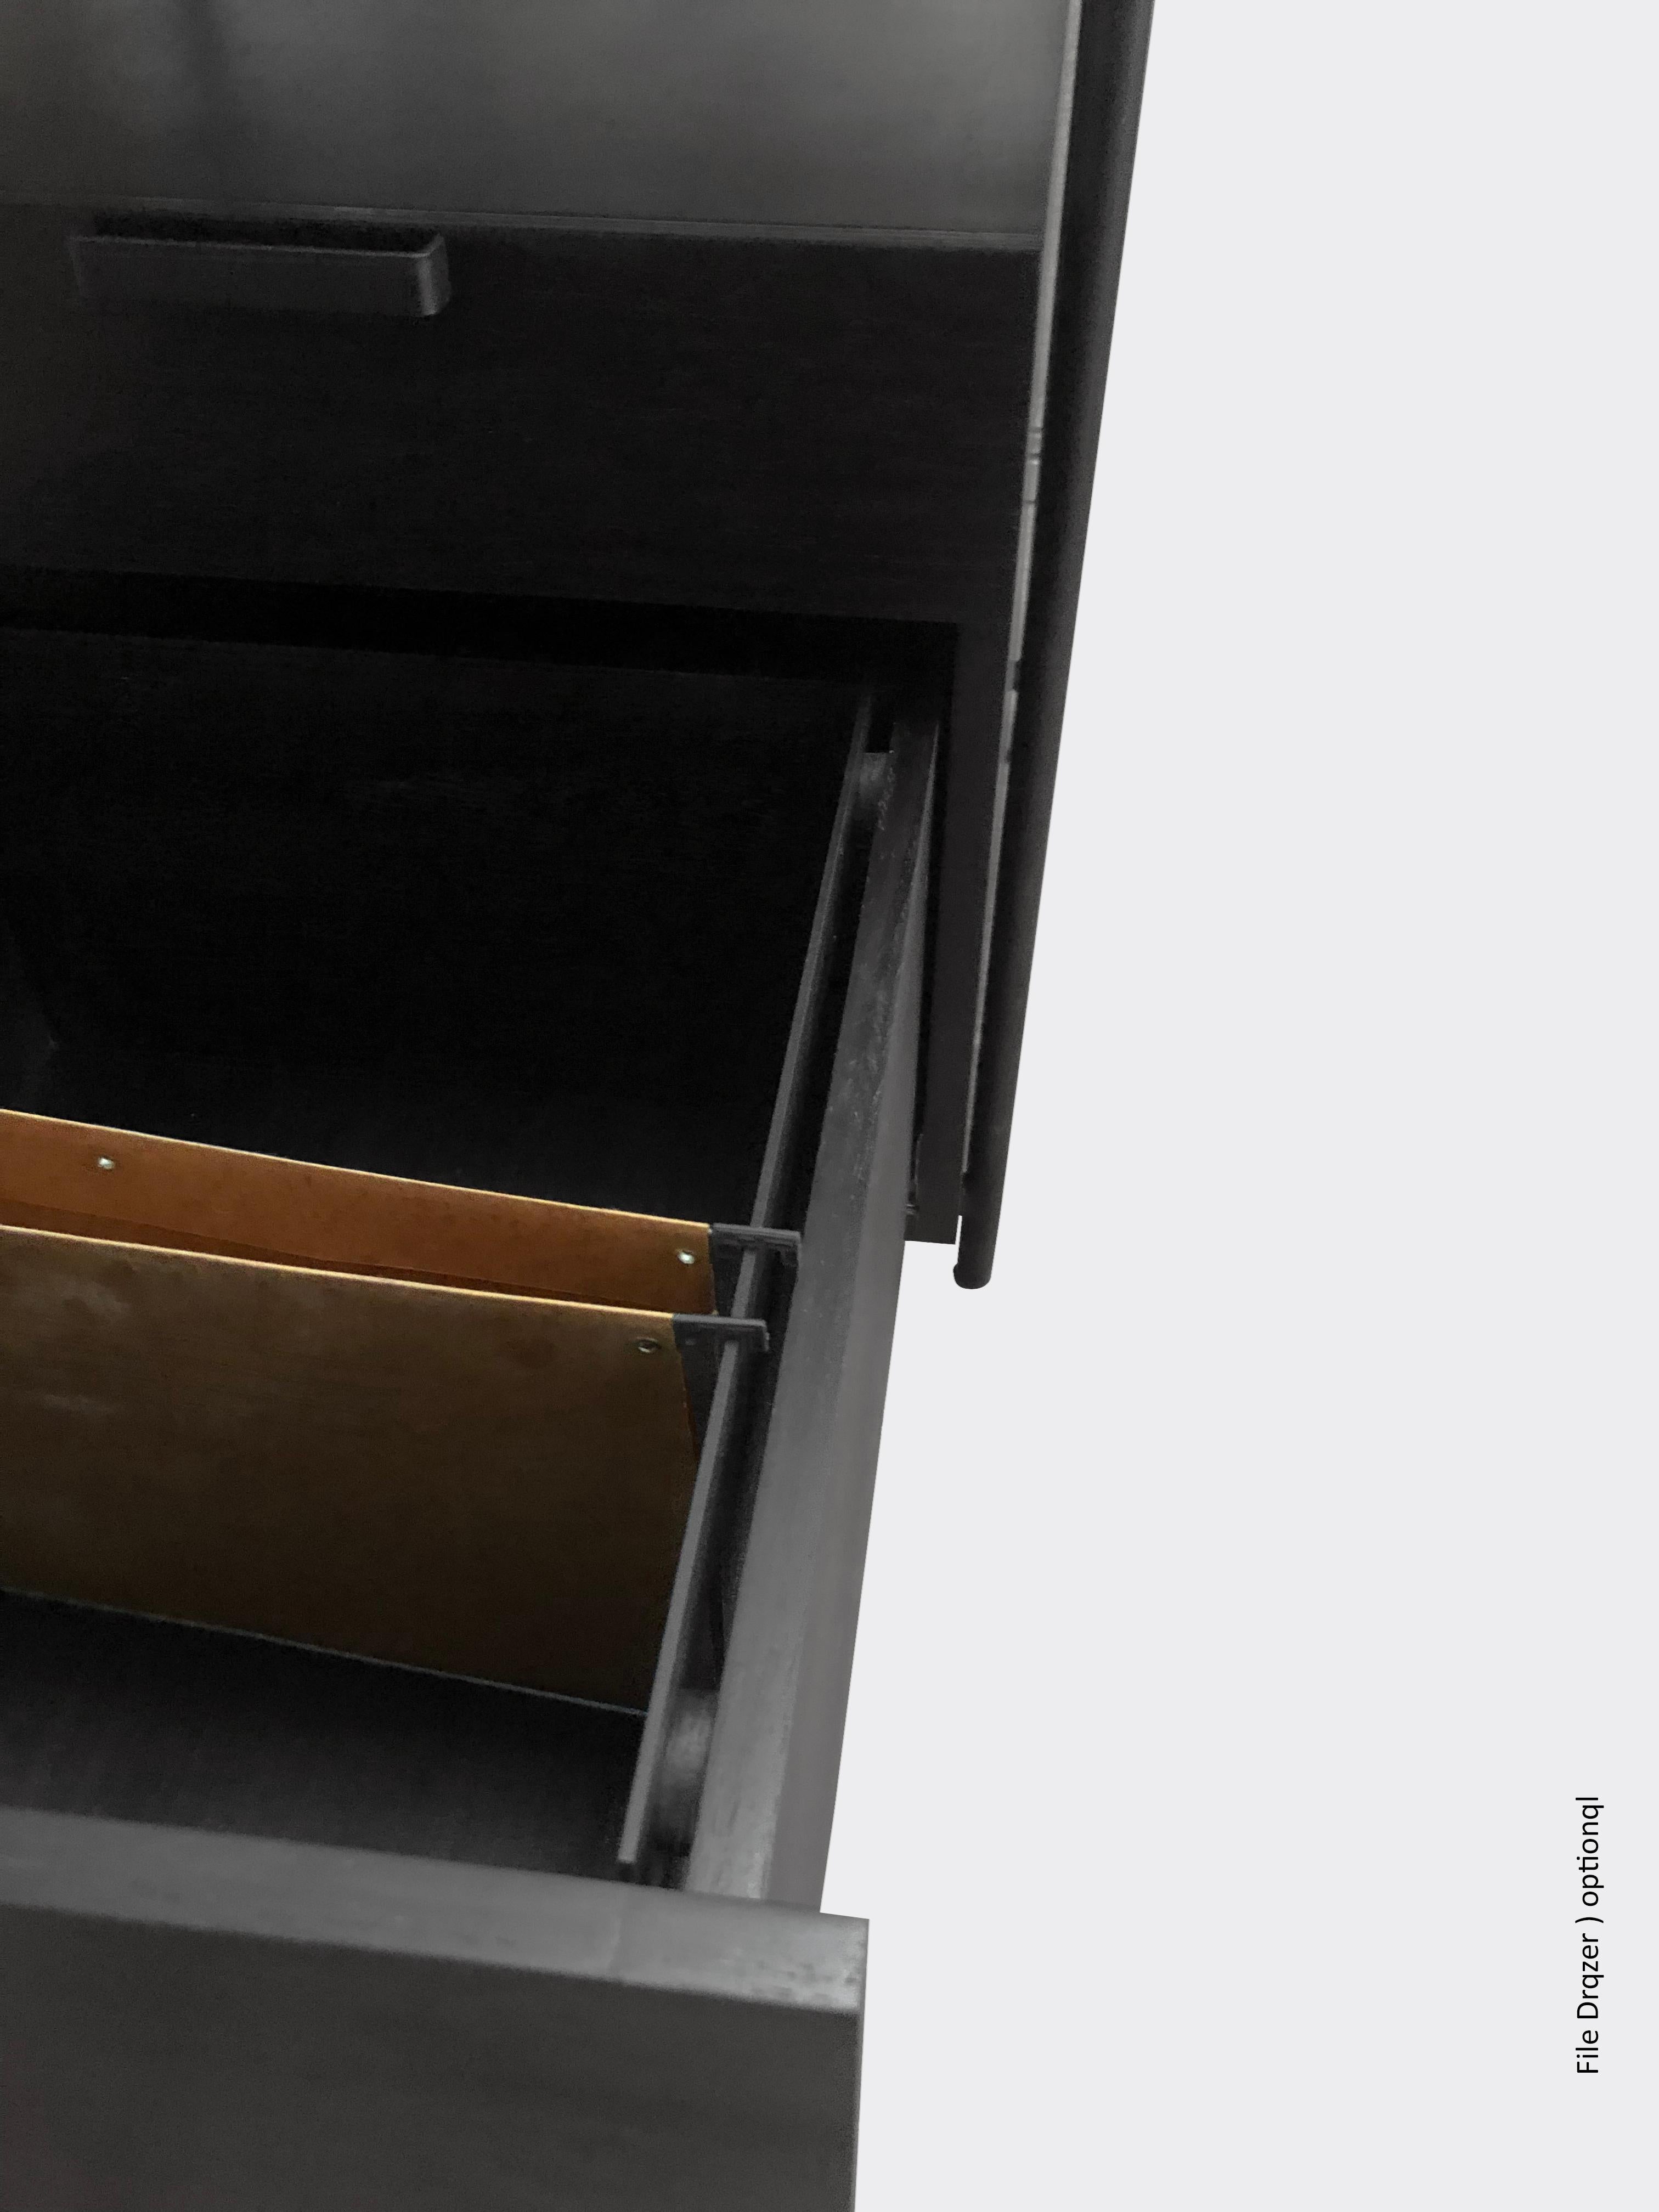 Large Black Desk Files Drawers, Wood Metal, Brazilian Mid-Century Modern Style For Sale 7